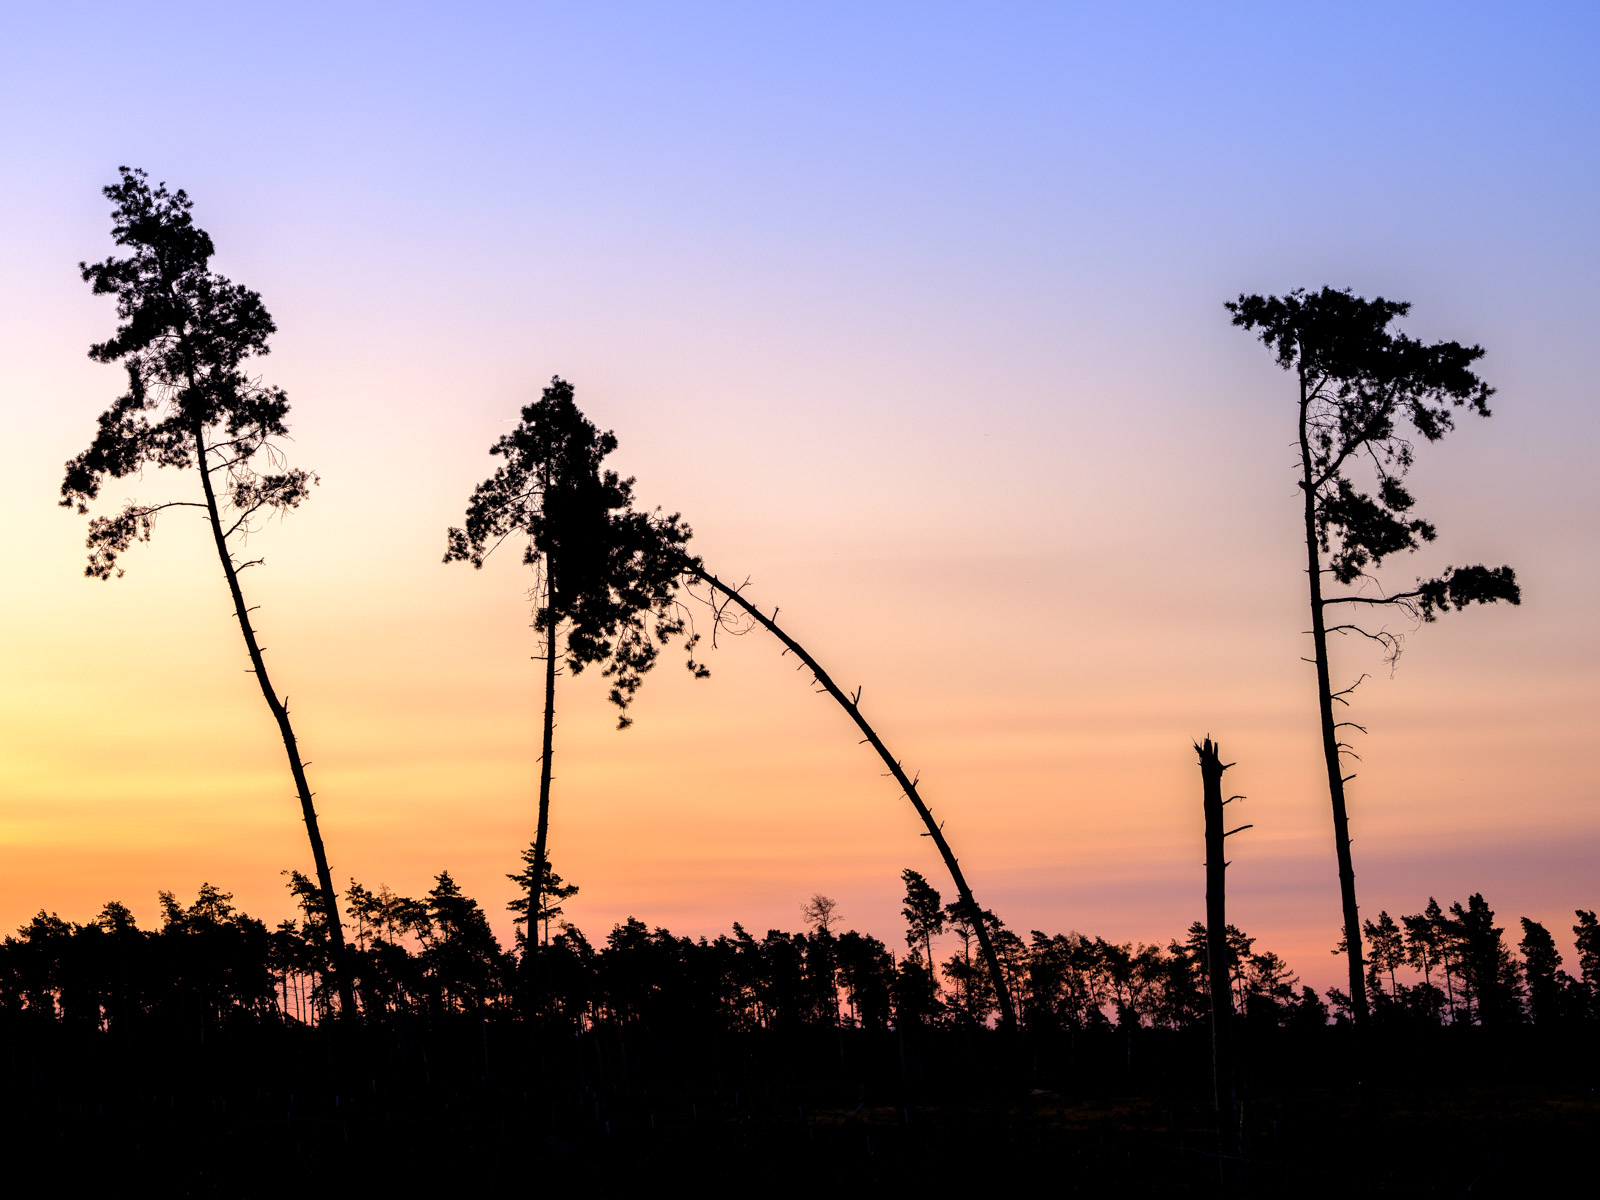 Old pines at dawn in September 2020 (Oerlinghausen, Germany).